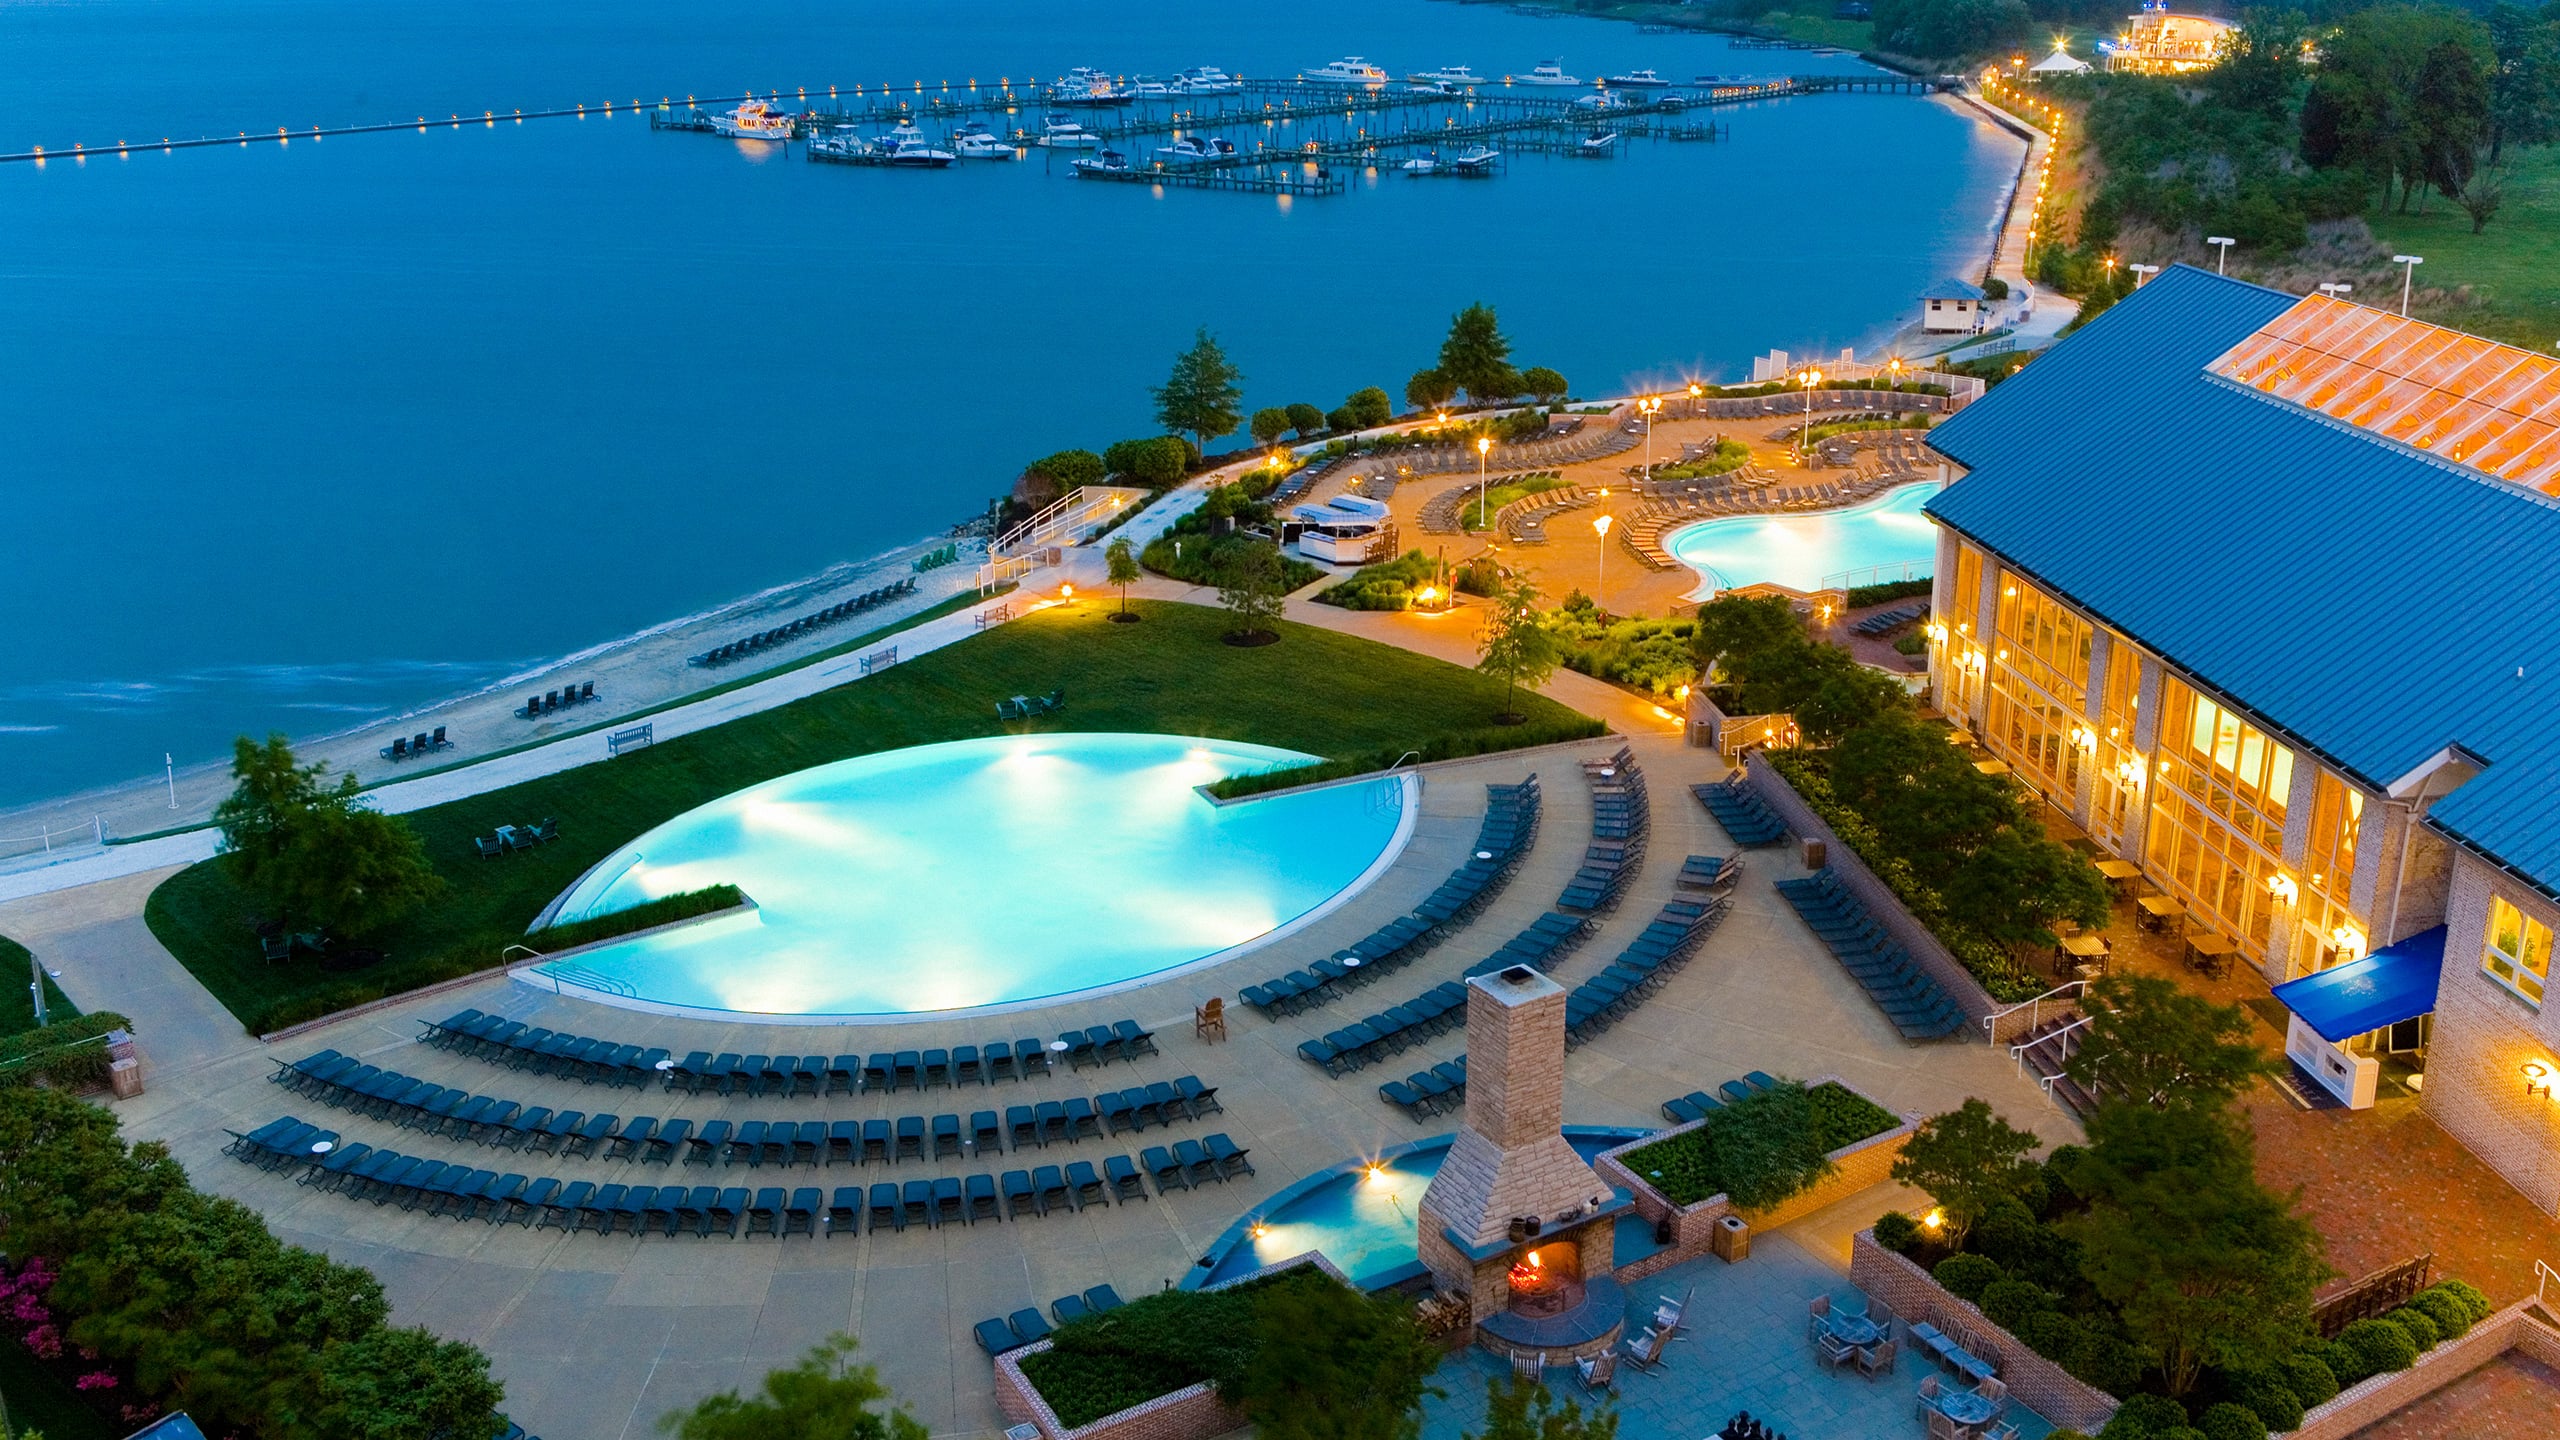 Hyatt Regency Chesapeake Bay Golf Resort, Spa and Marina Pool Marina Overview